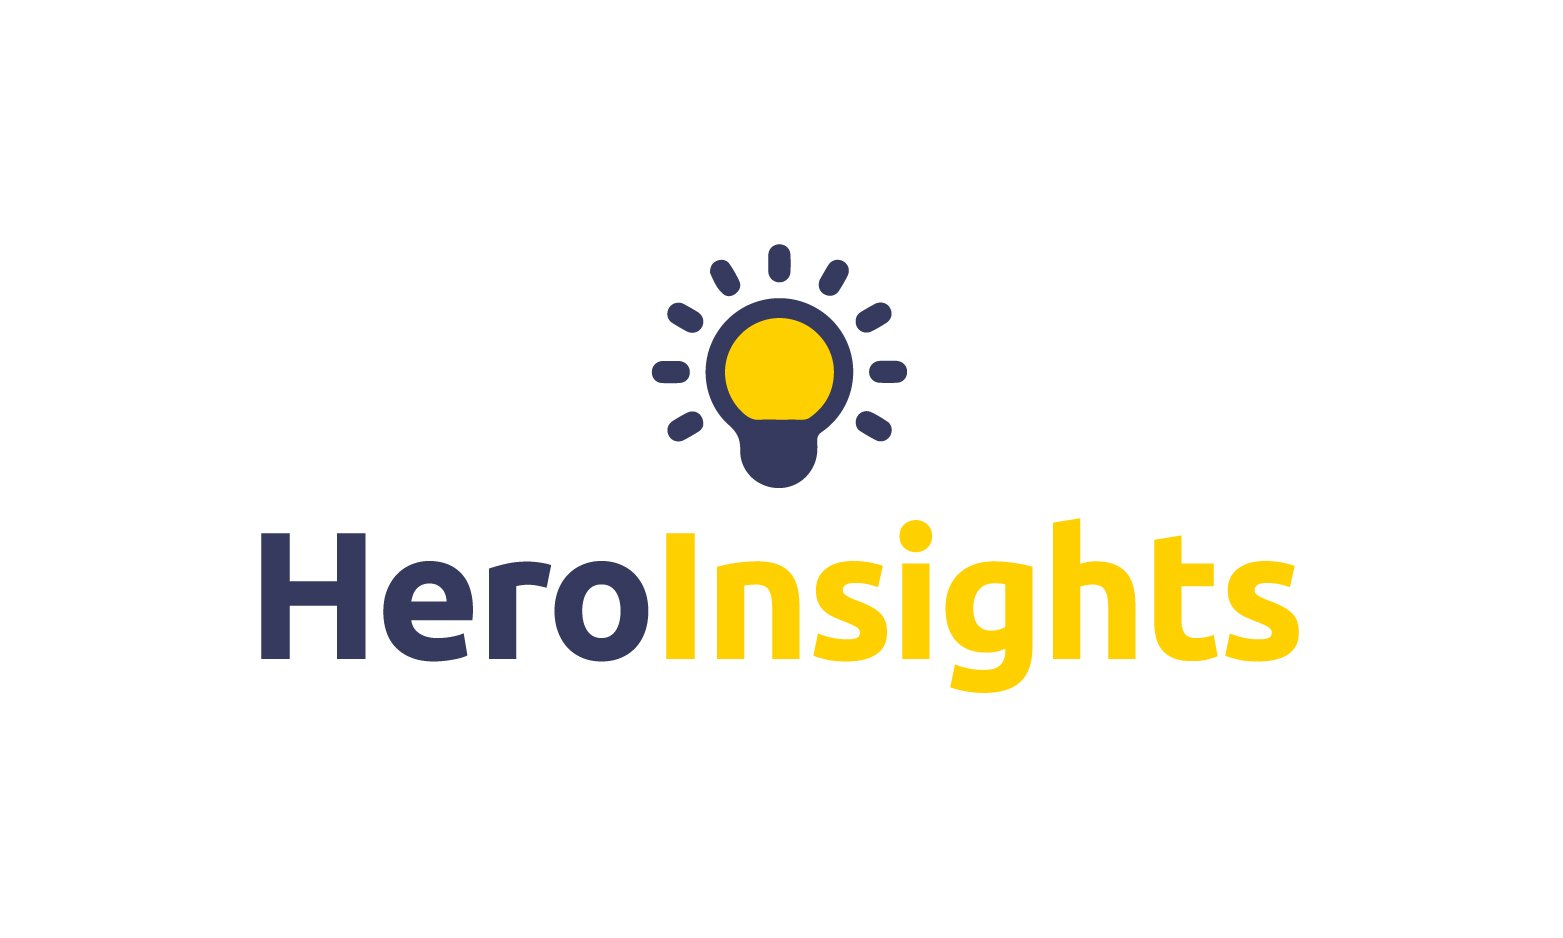 HeroInsights.com - Creative brandable domain for sale